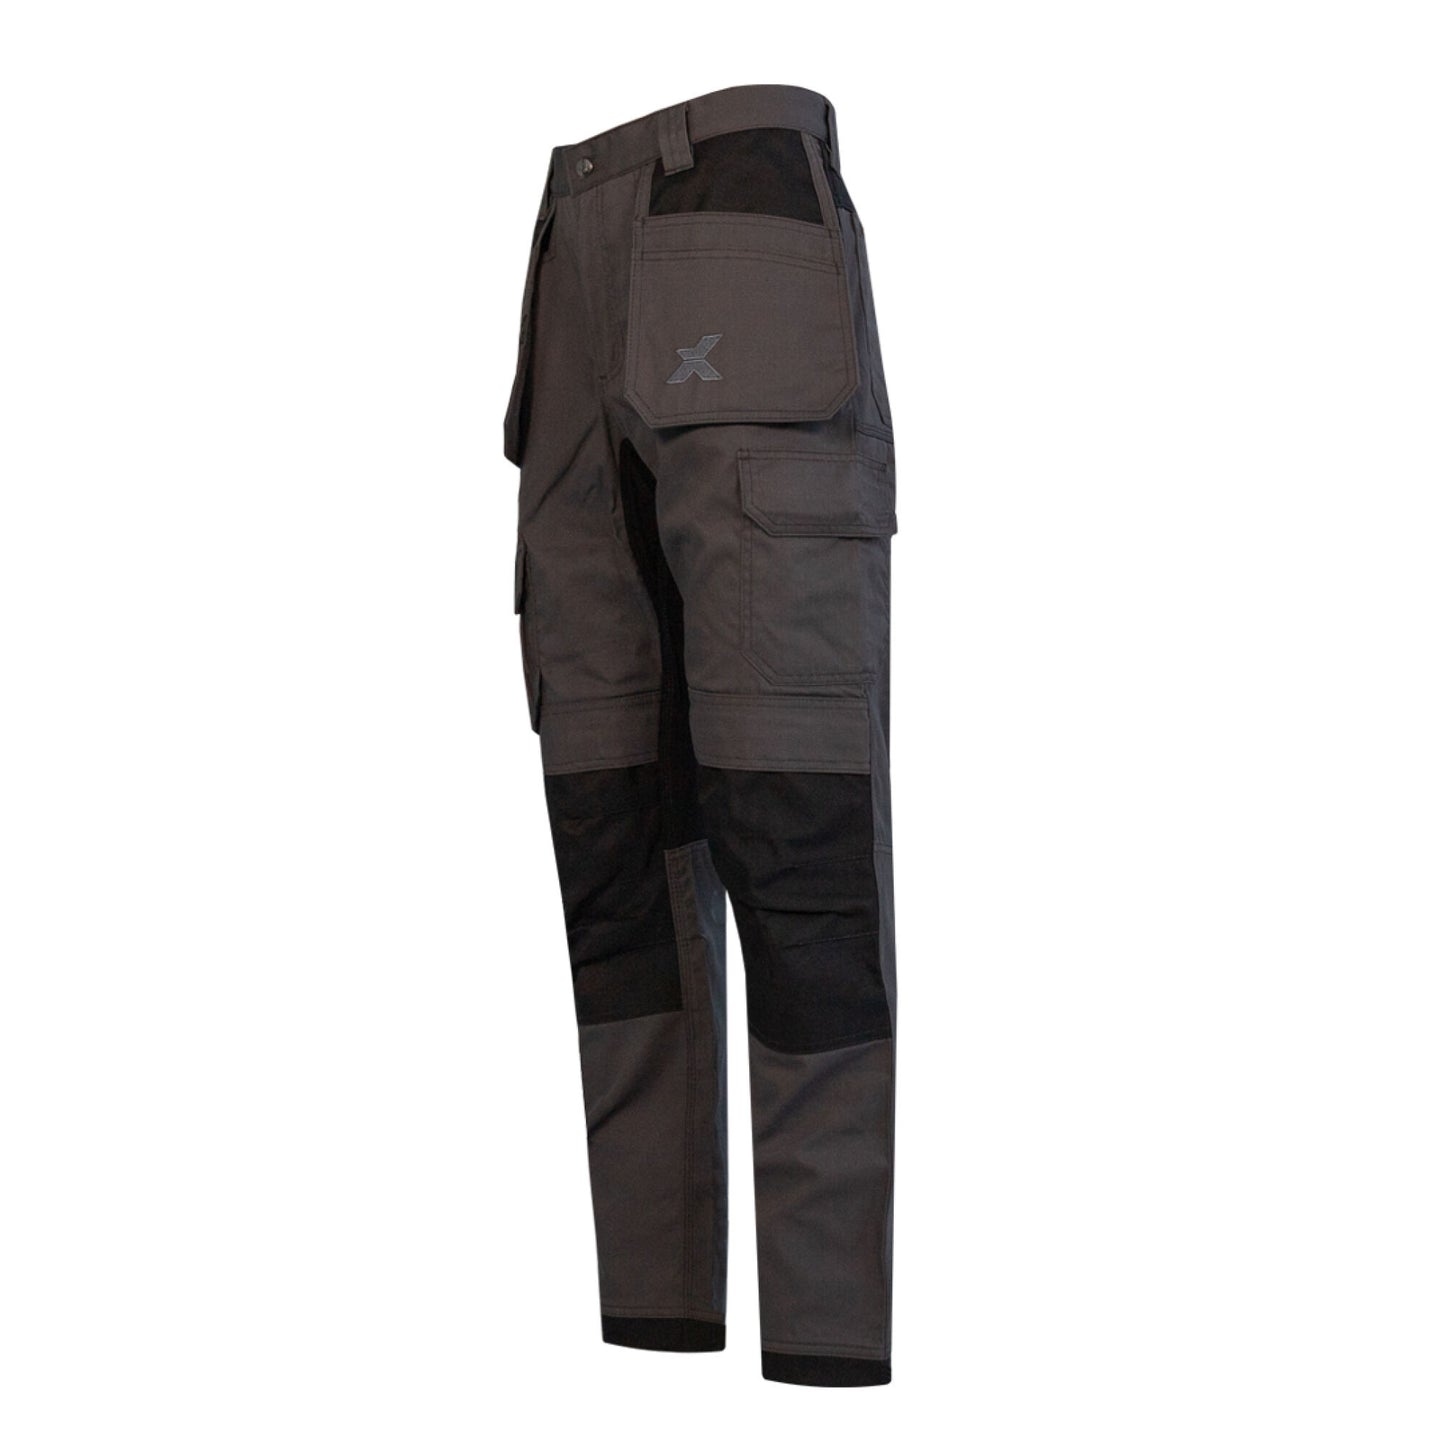 Xpert Core Stretch Work Trousers - Grey/Black